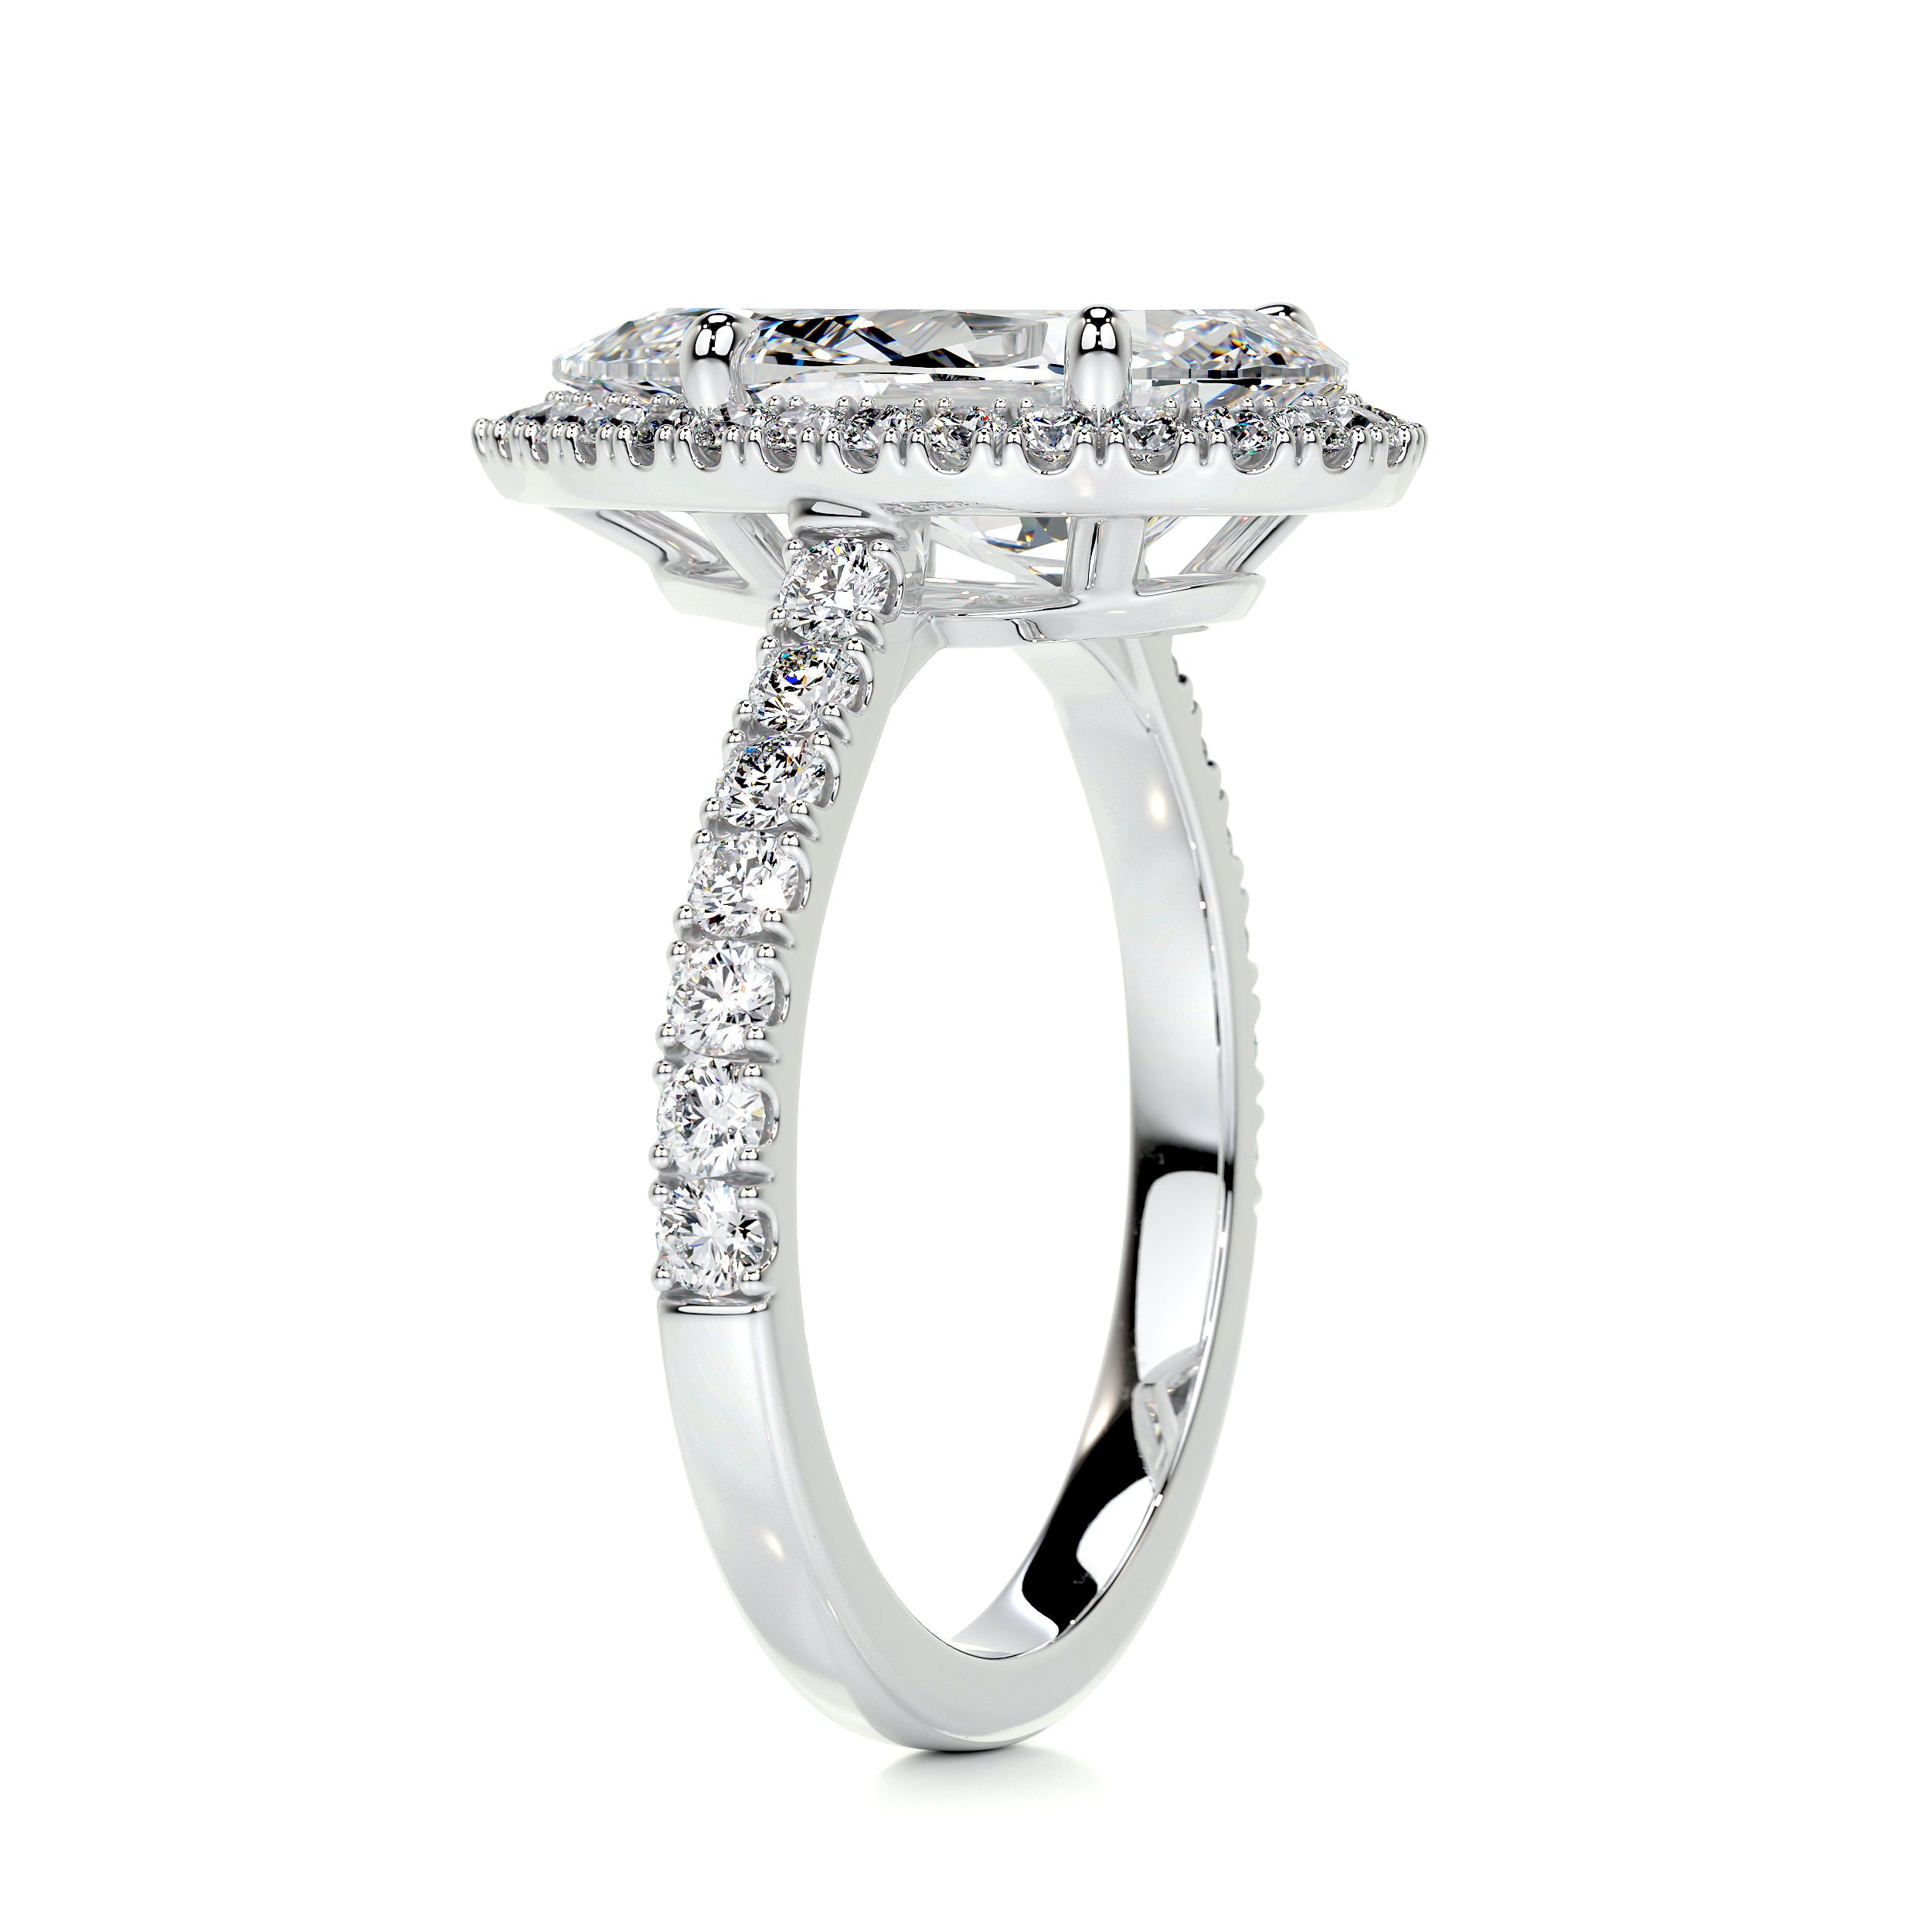 Sophia Diamond Engagement Ring   (3 Carat) -14K White Gold